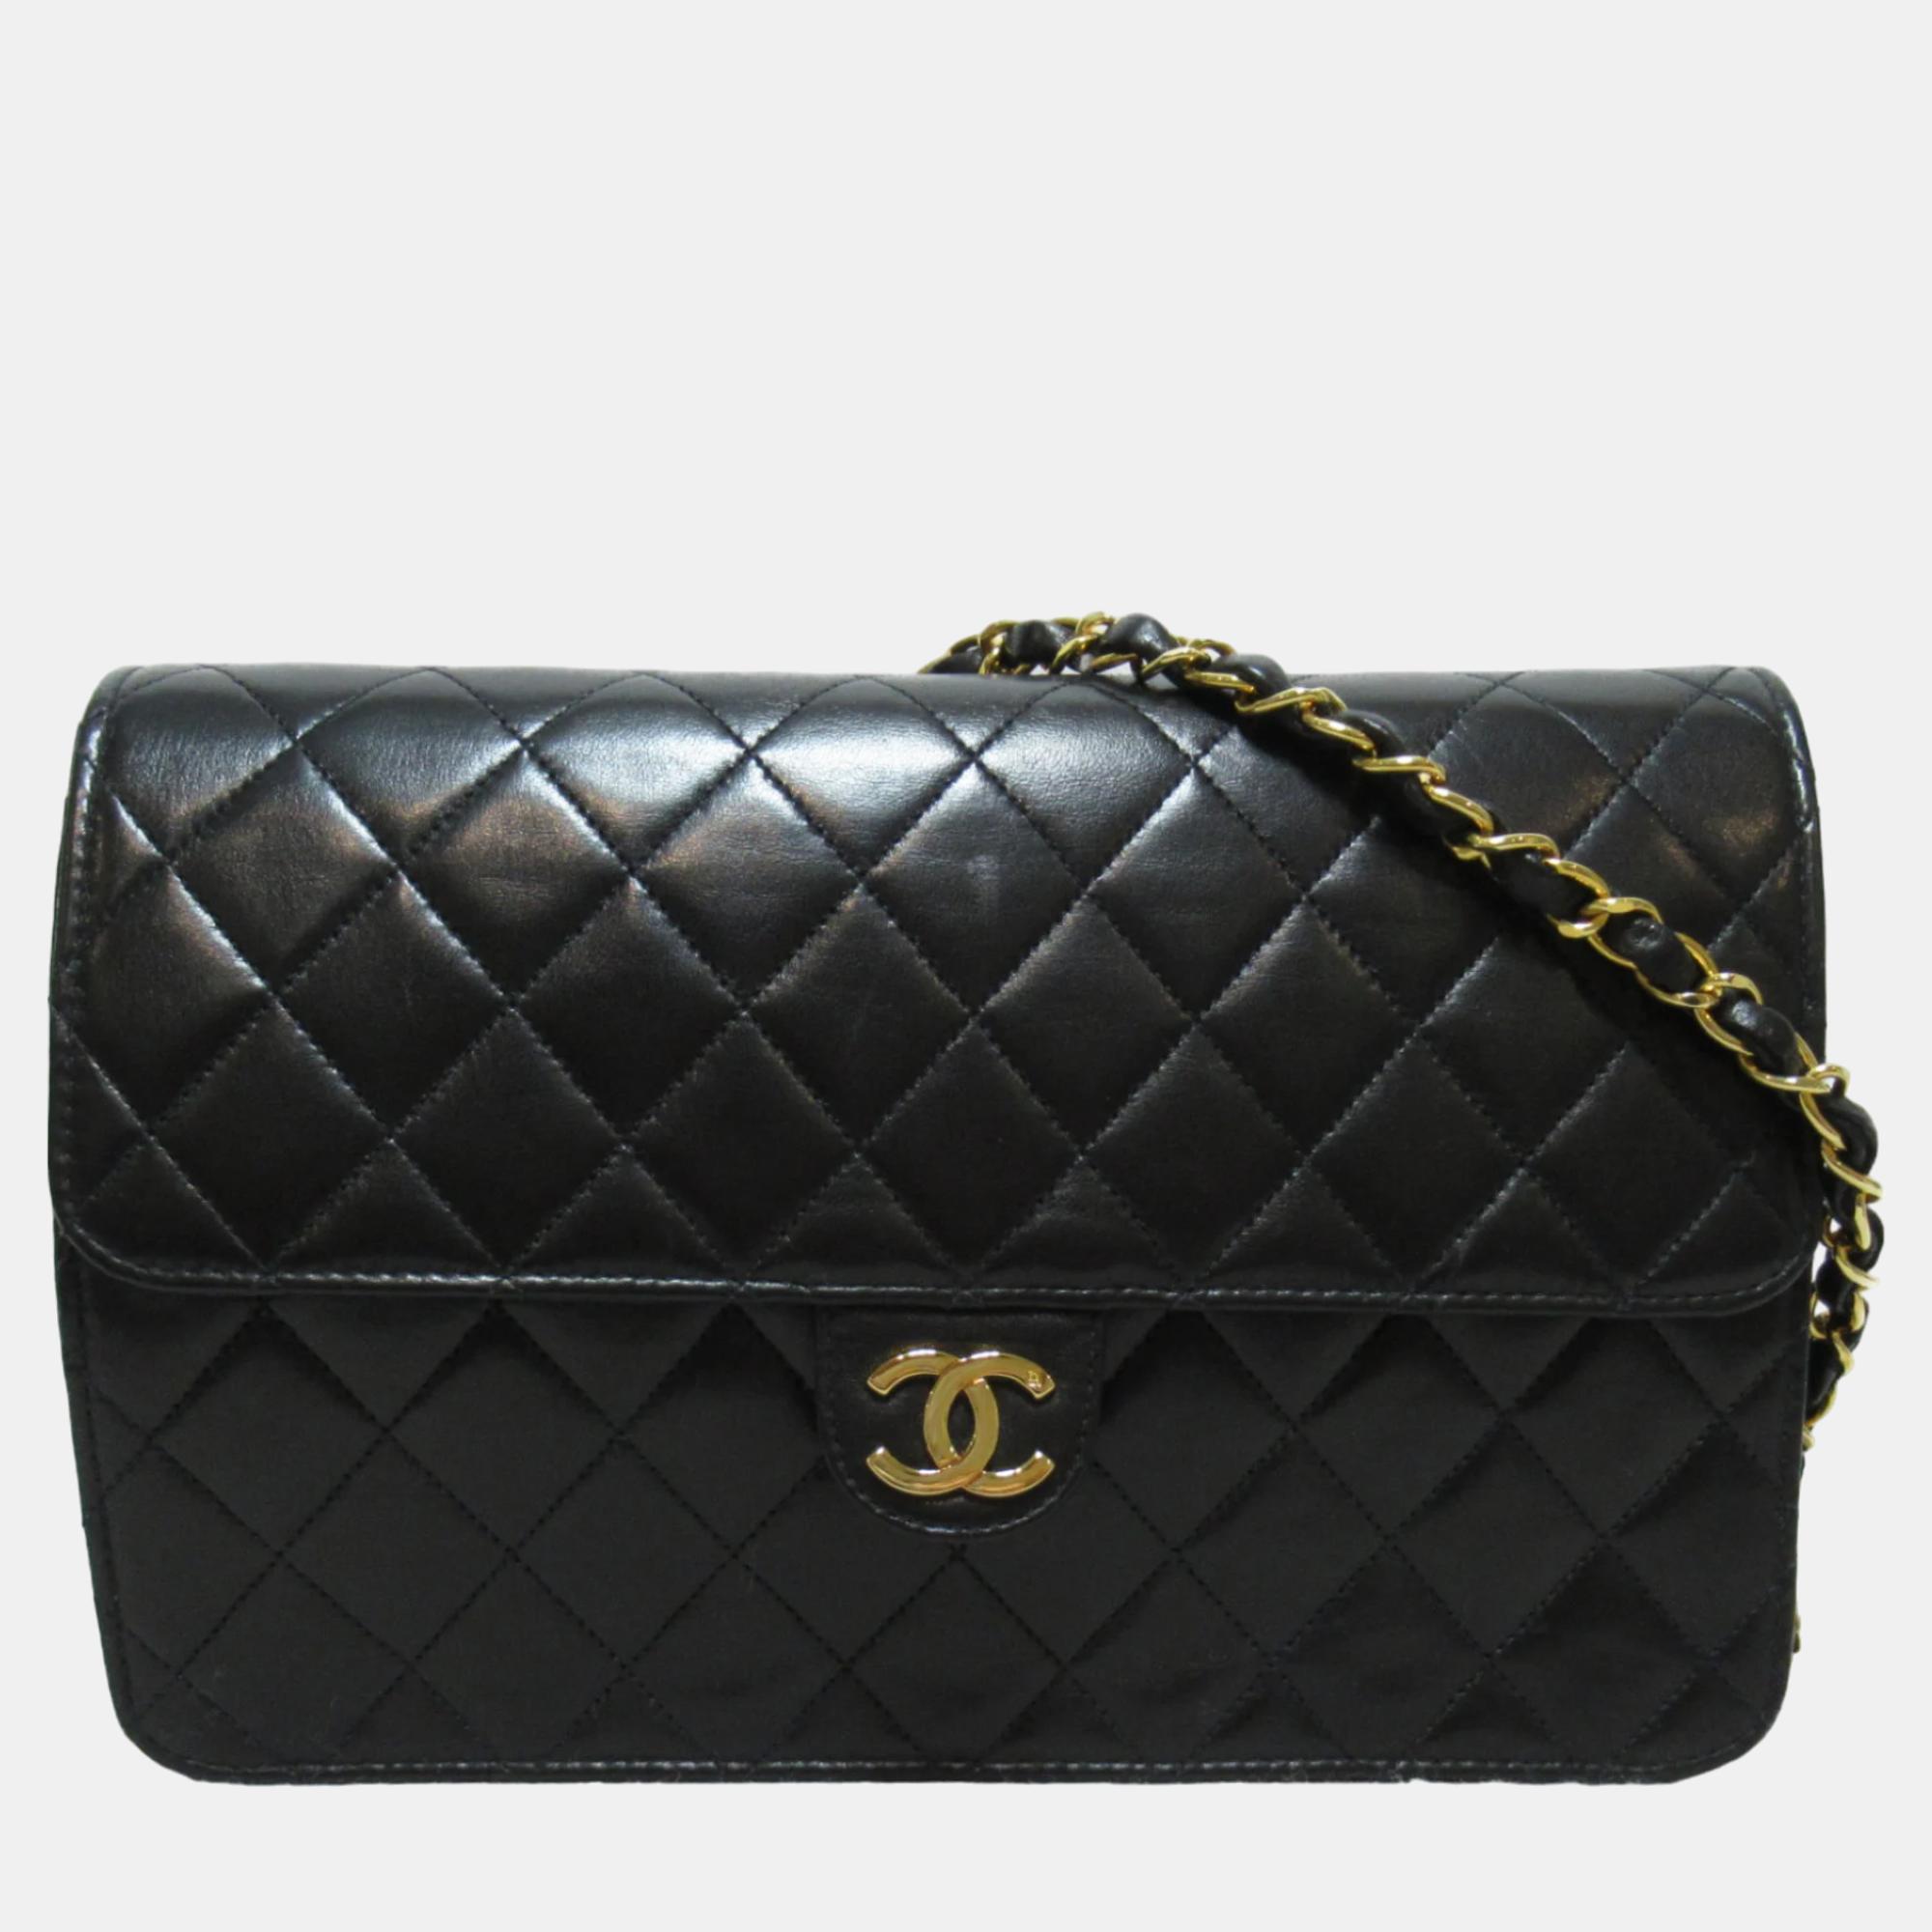 Chanel black leather medium flap bag